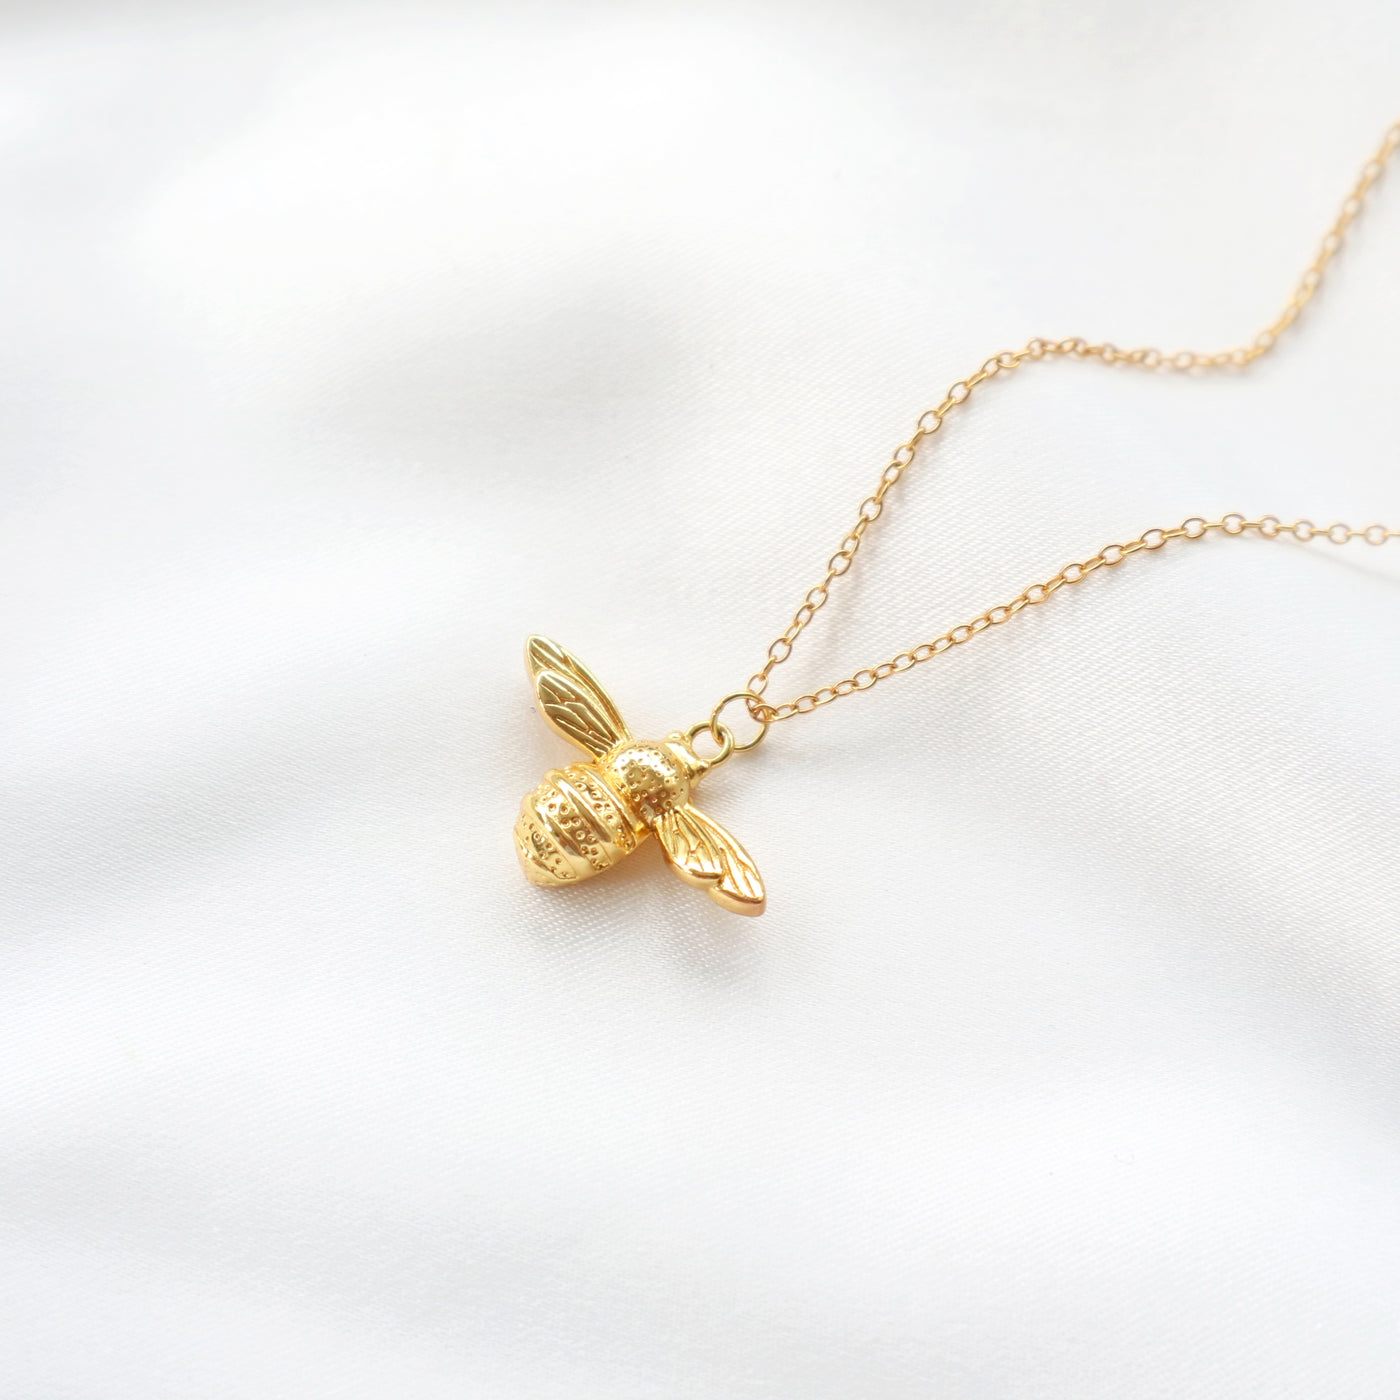 Dainty gold honey bumble bee pendant necklace, Rani & Co. jewellery